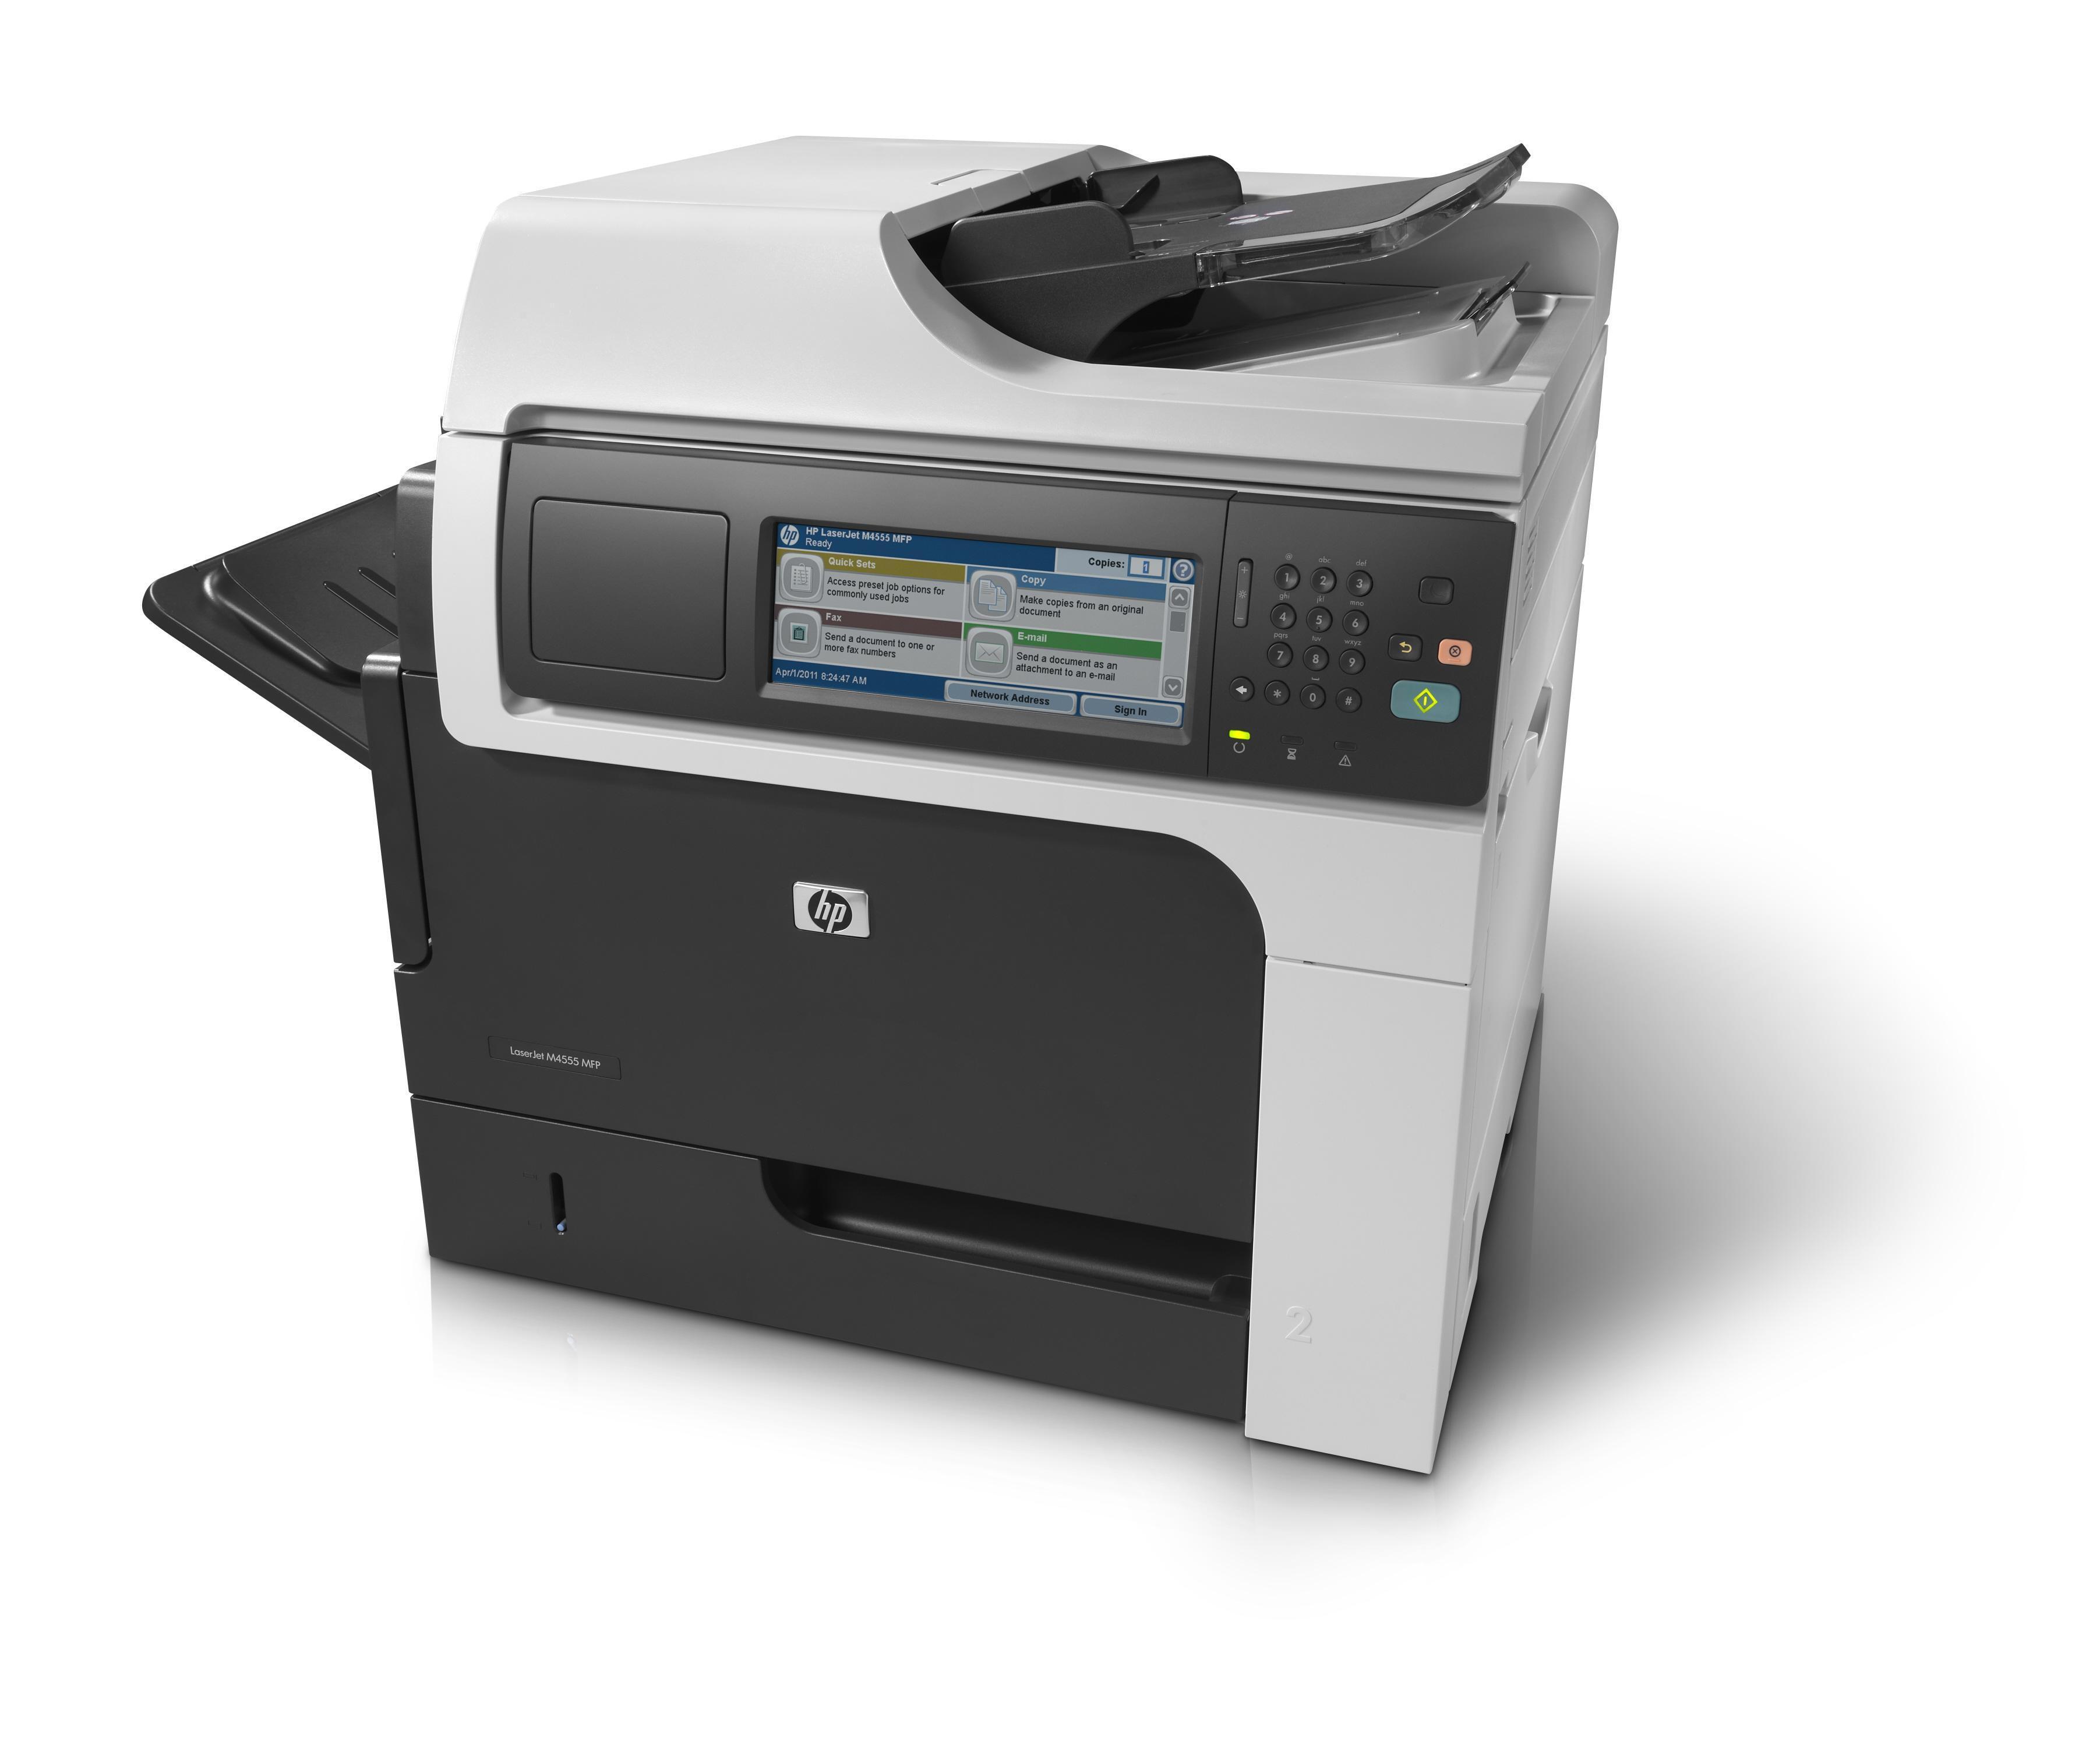 Máy in laser đen trắng đa năng (All-in-one) HP Enterprise M4555 MFP - A4